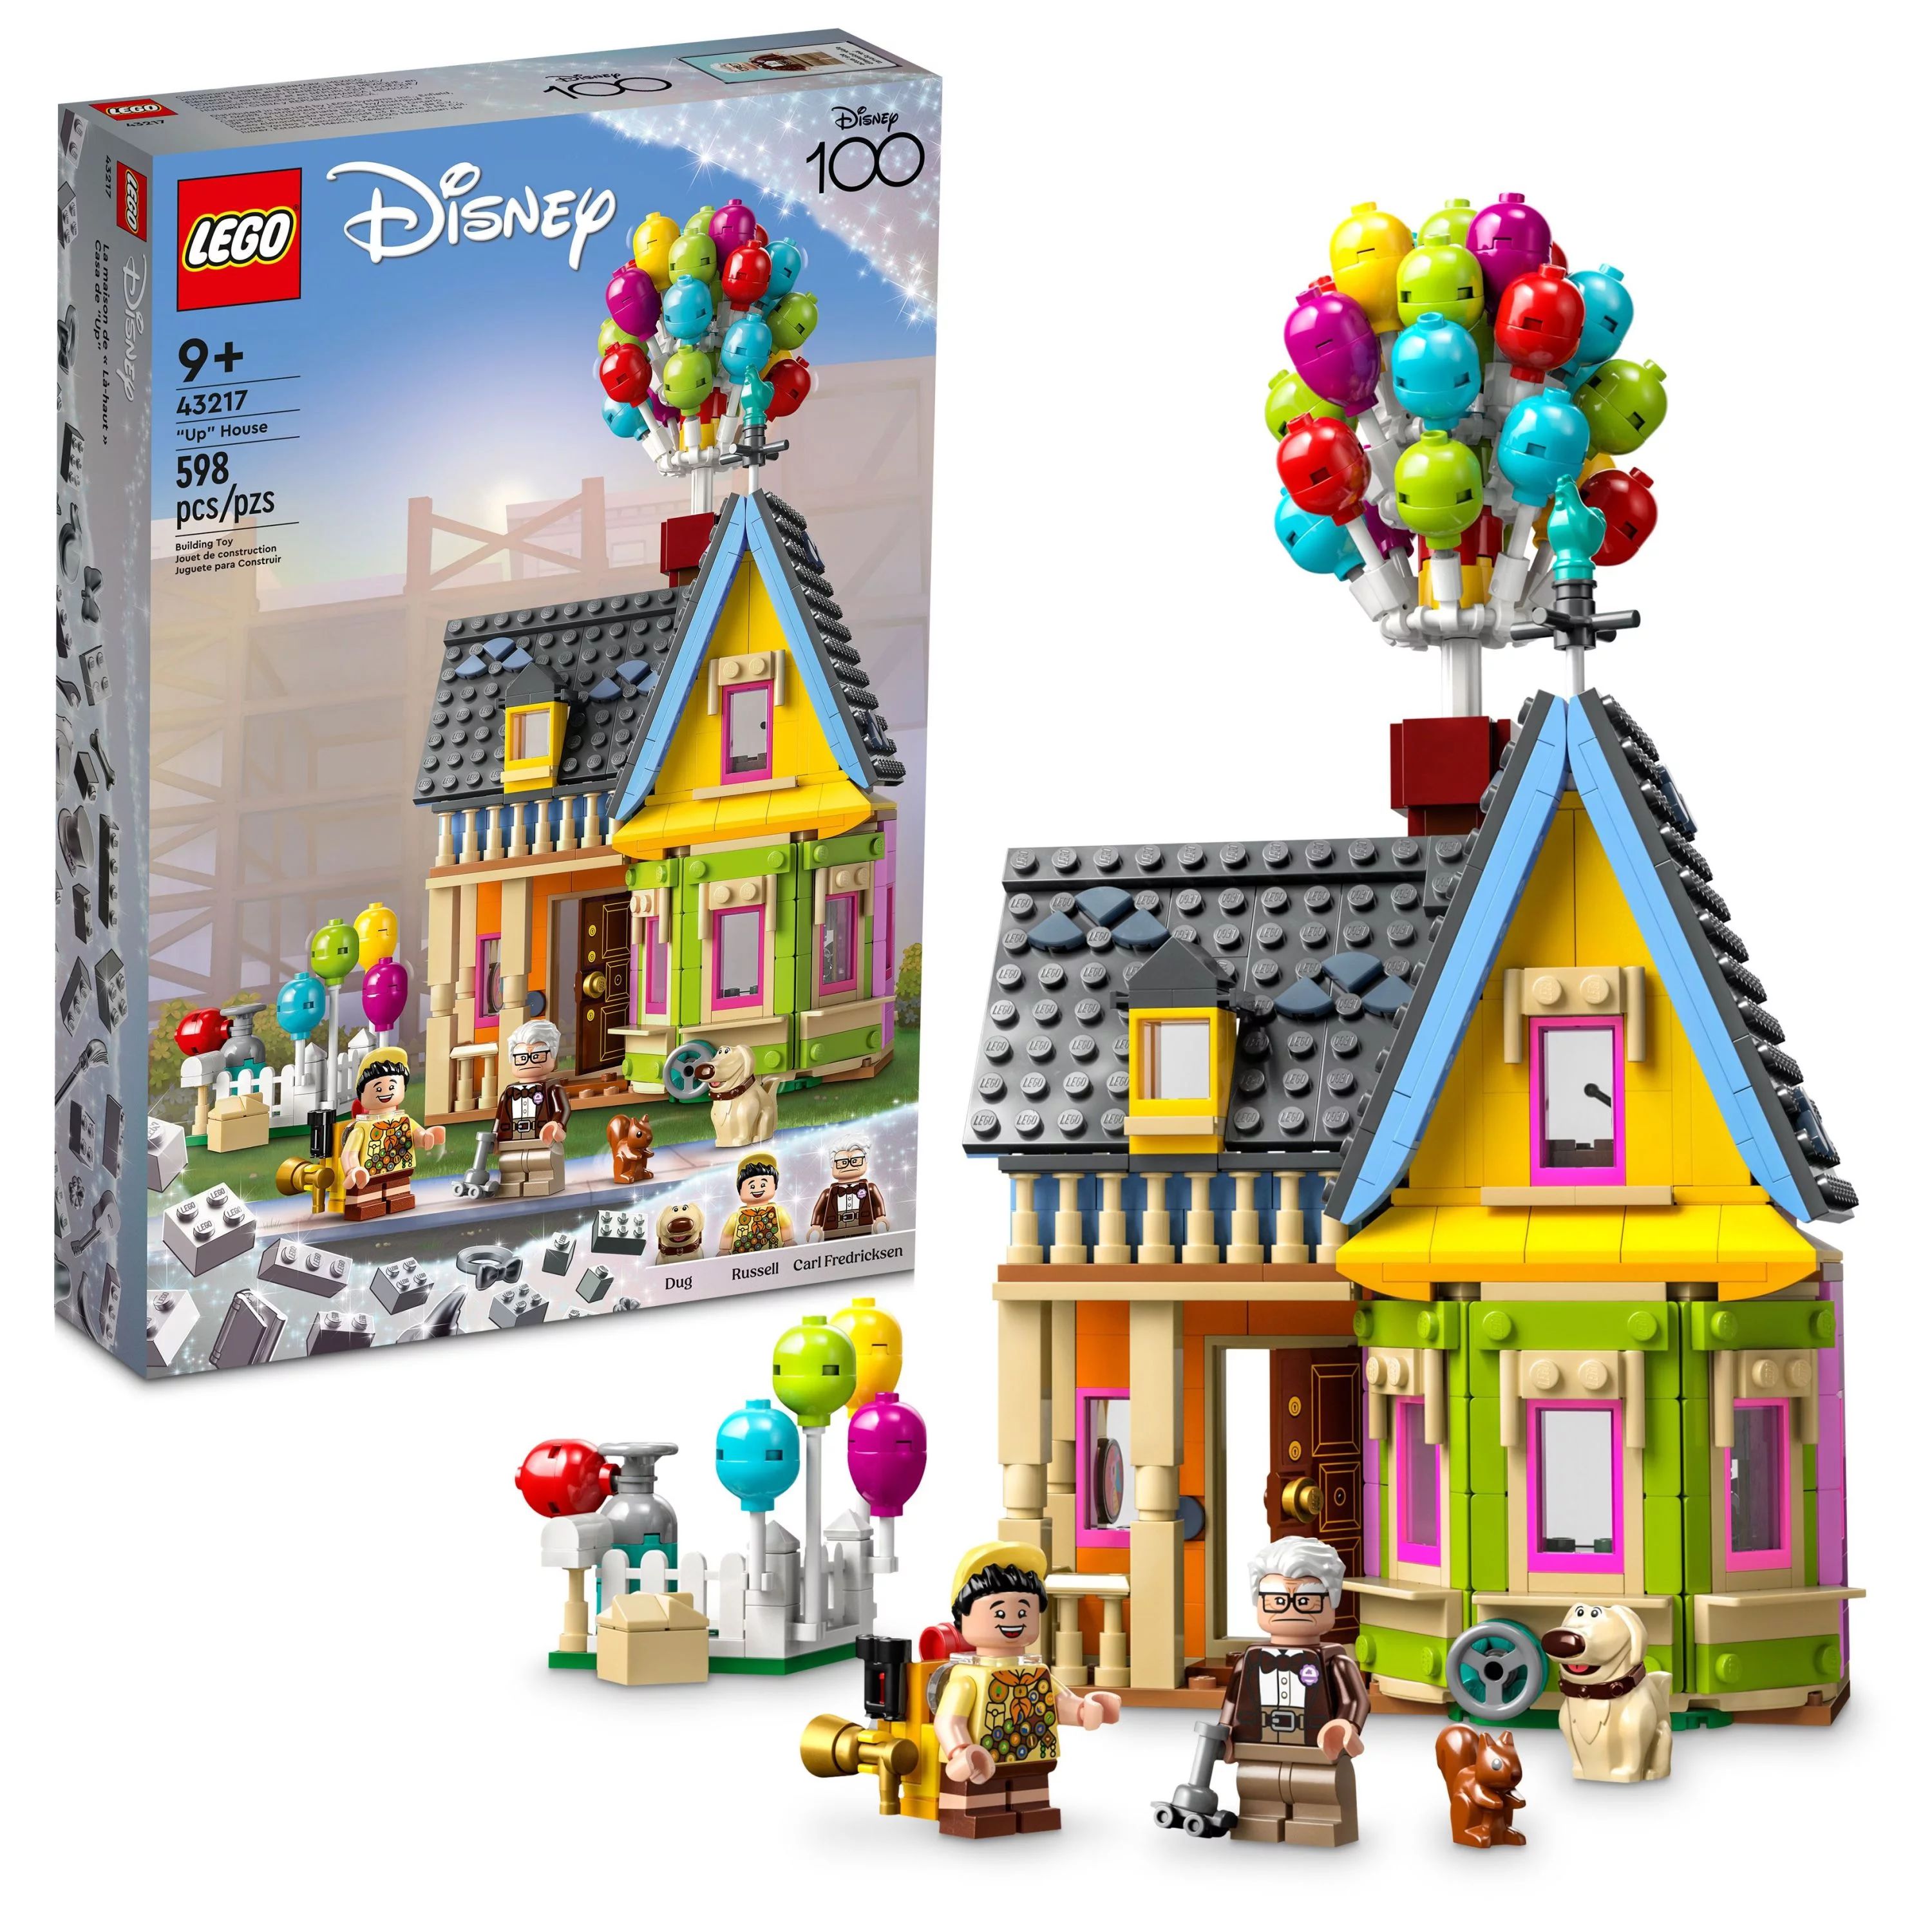 LEGO Disney and Pixar ‘Up’ House 43217 Disney 100 Celebration Classic Building Toy Set for Ki... | Walmart (US)